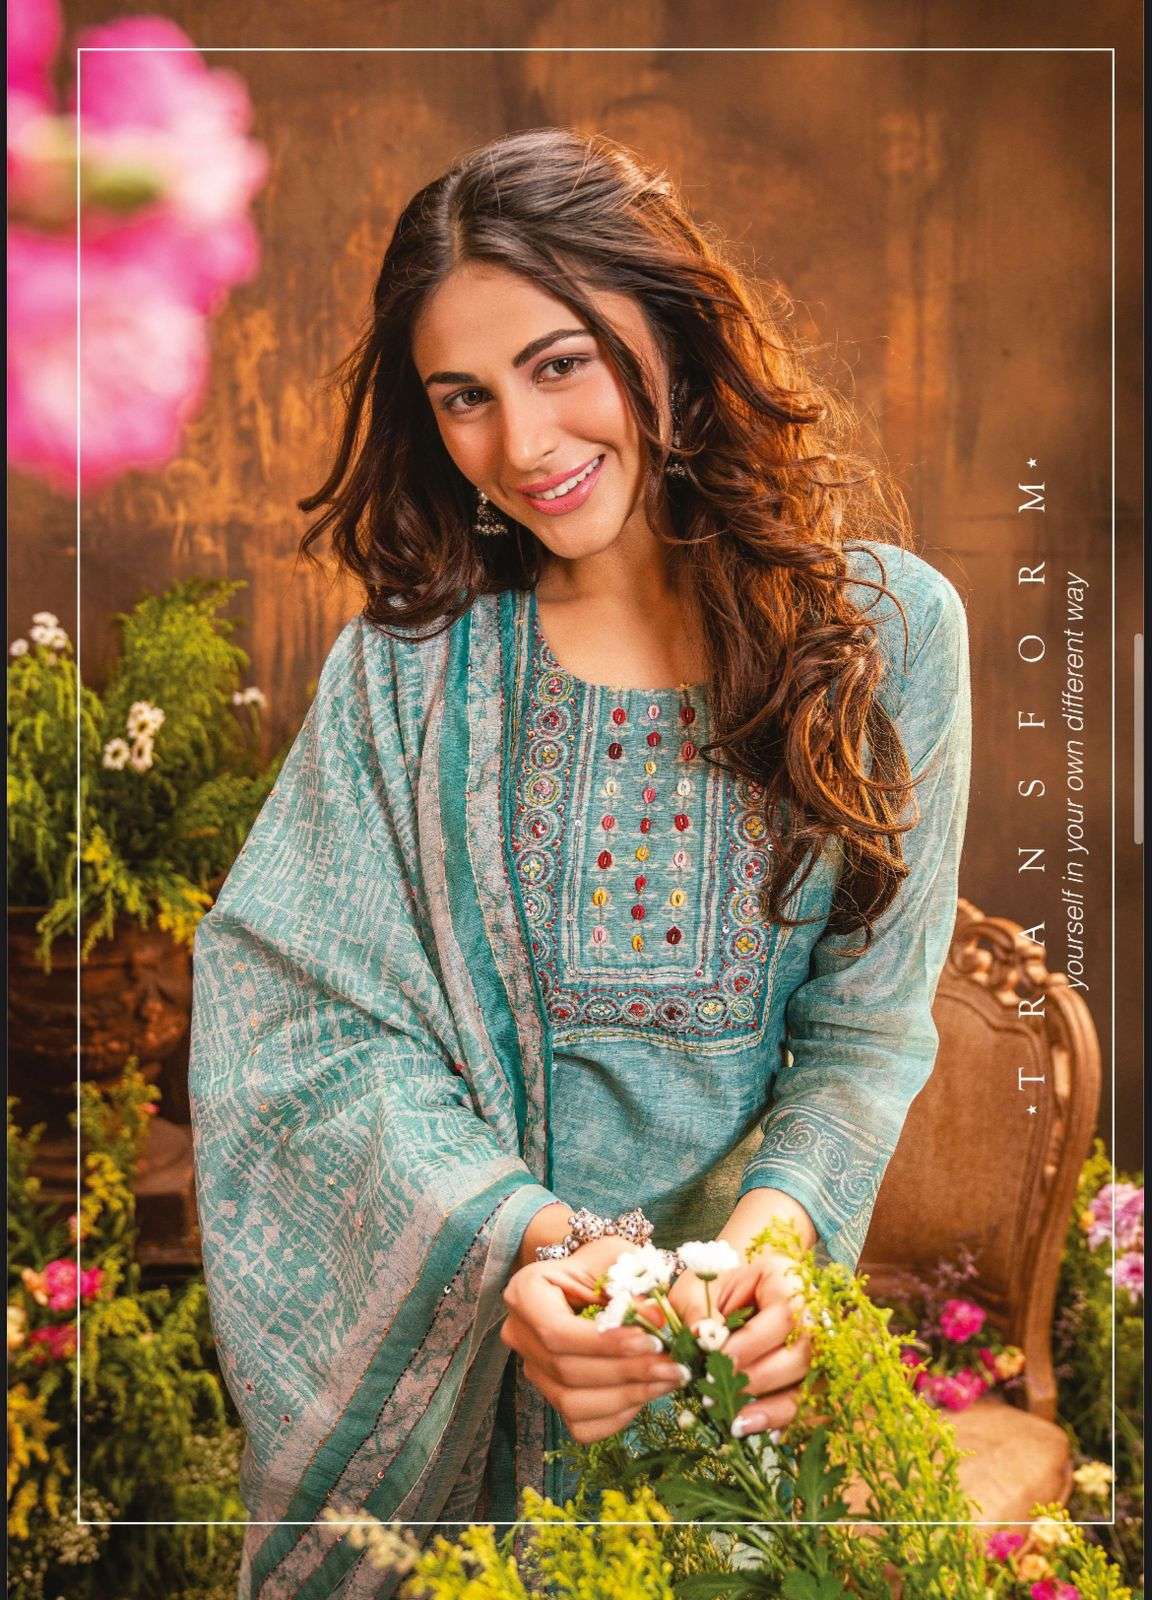 anju fabrics once more vol-2 3061-3066 series fancy look designer kurtis catalogue online market surat 